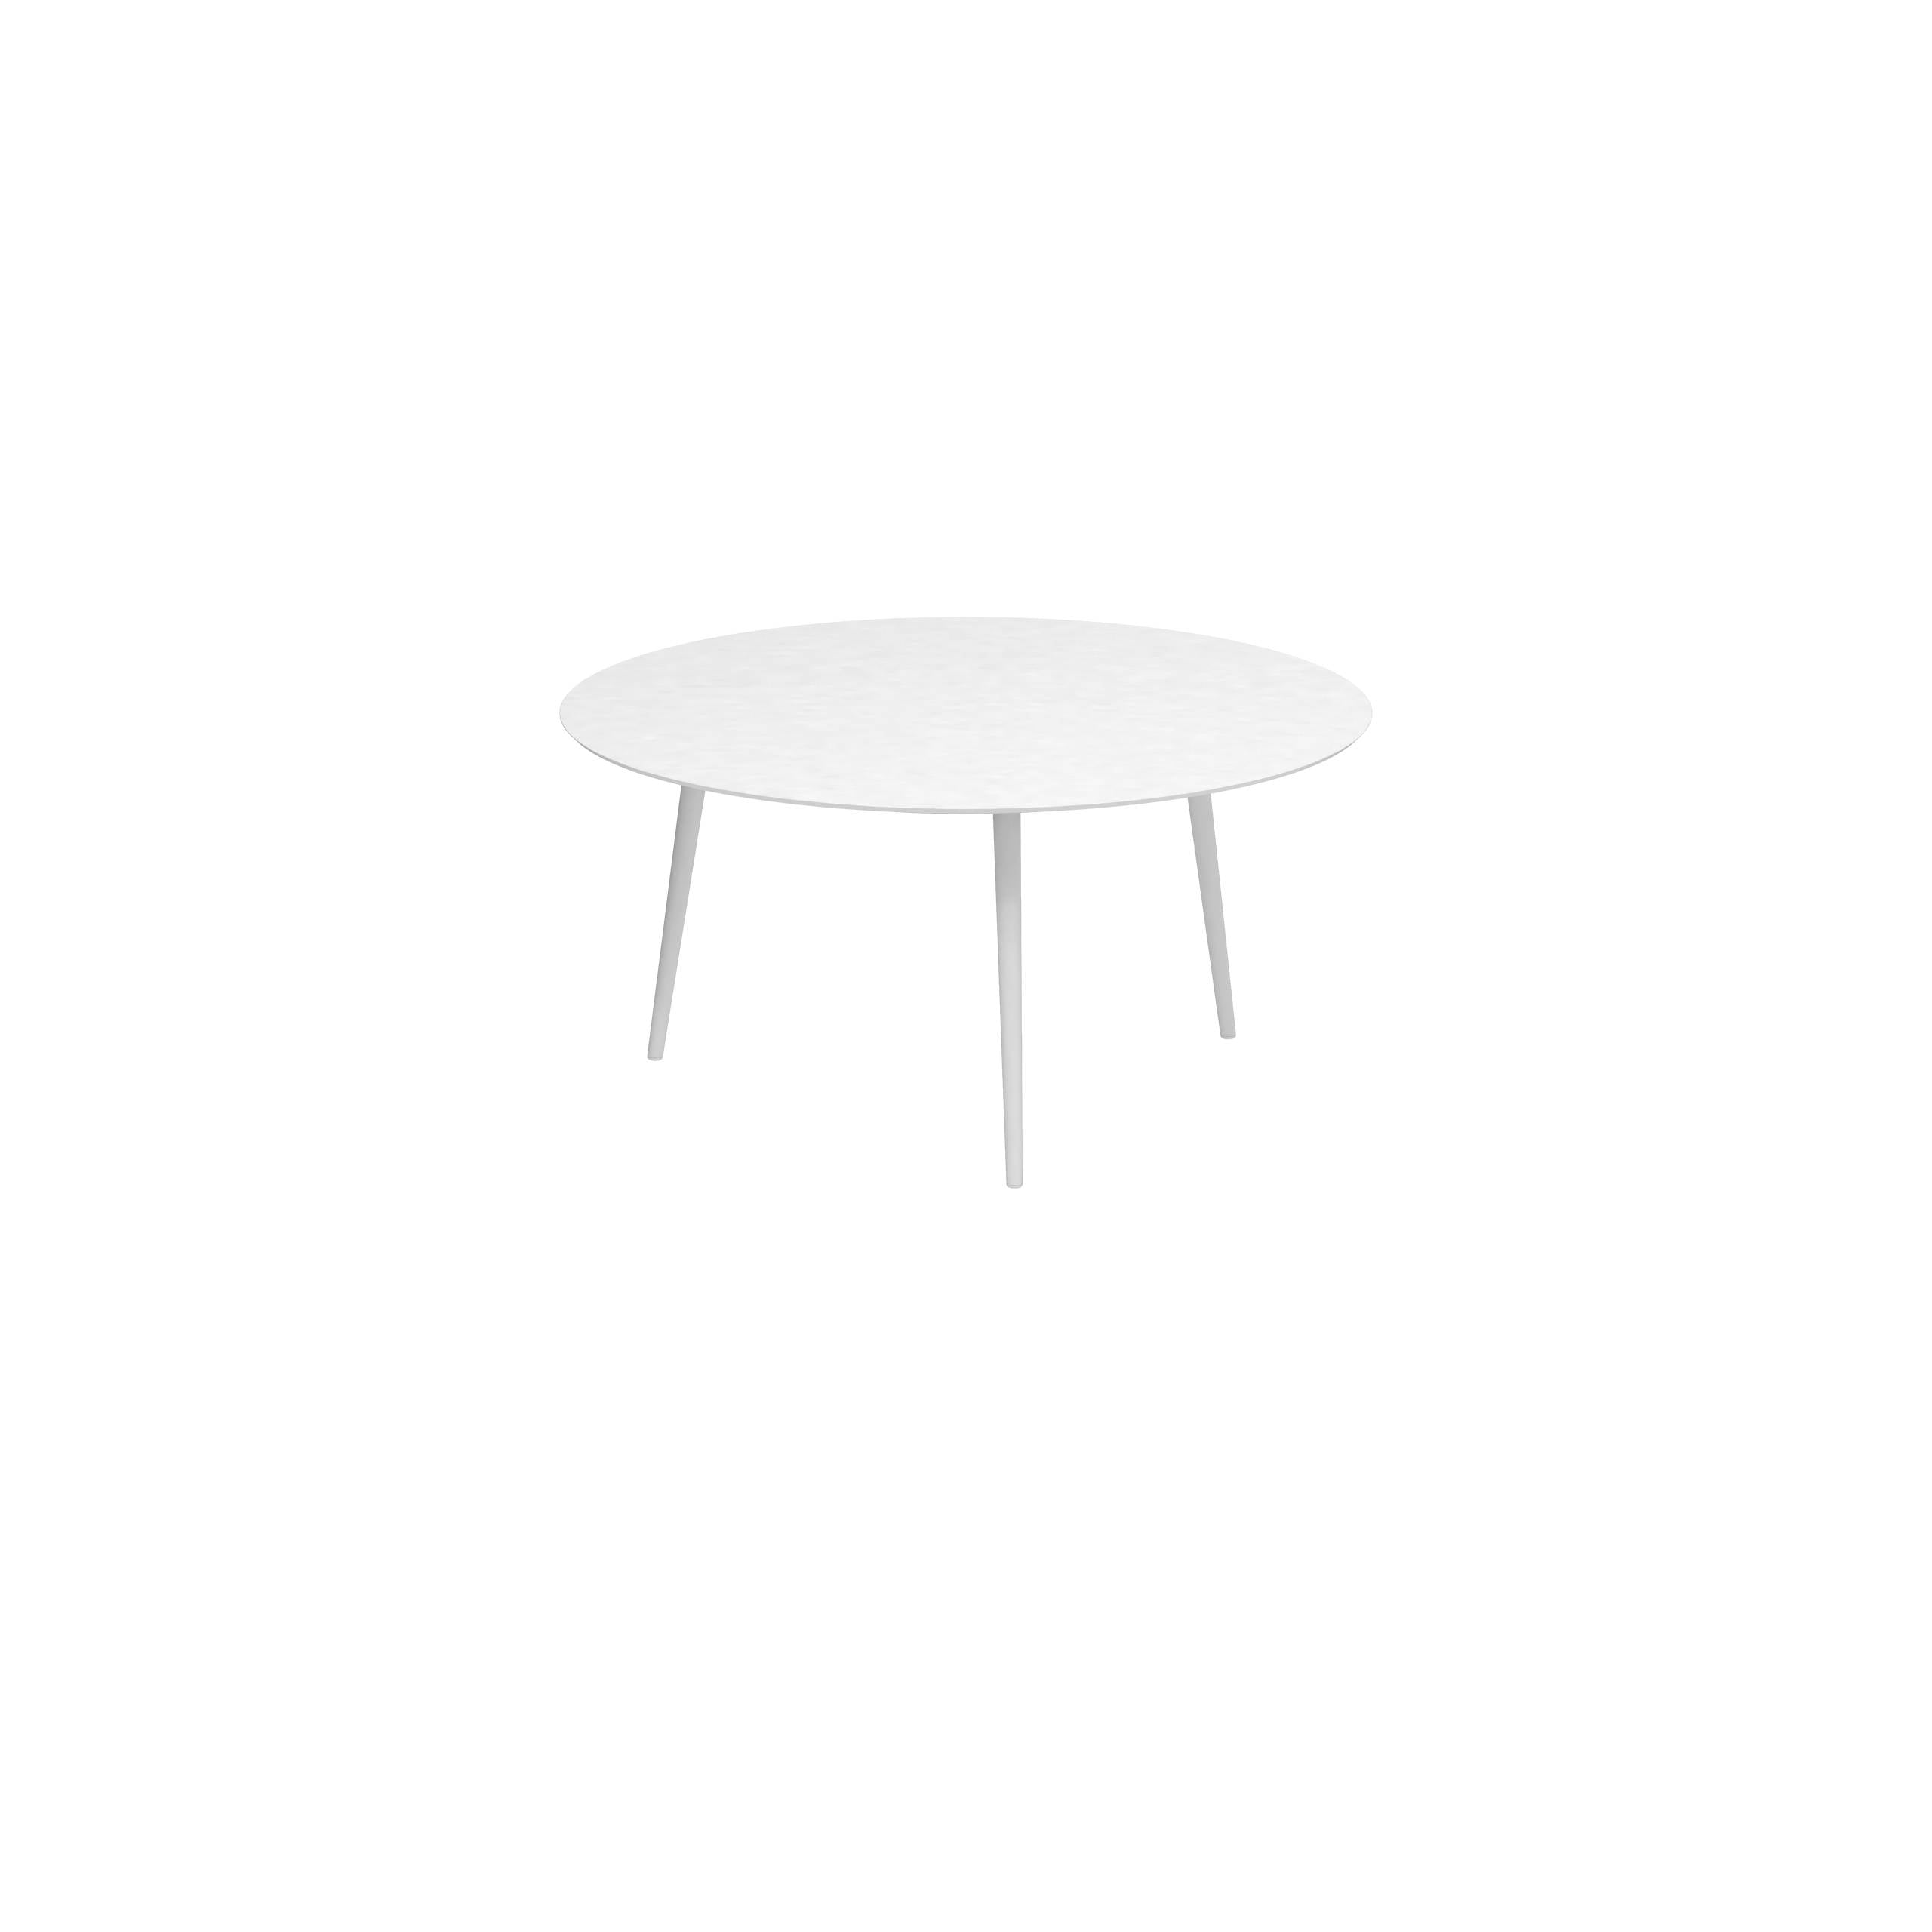 Styletto Standard Dining Table Ø 160cm Alu Legs White Ceramic Top White